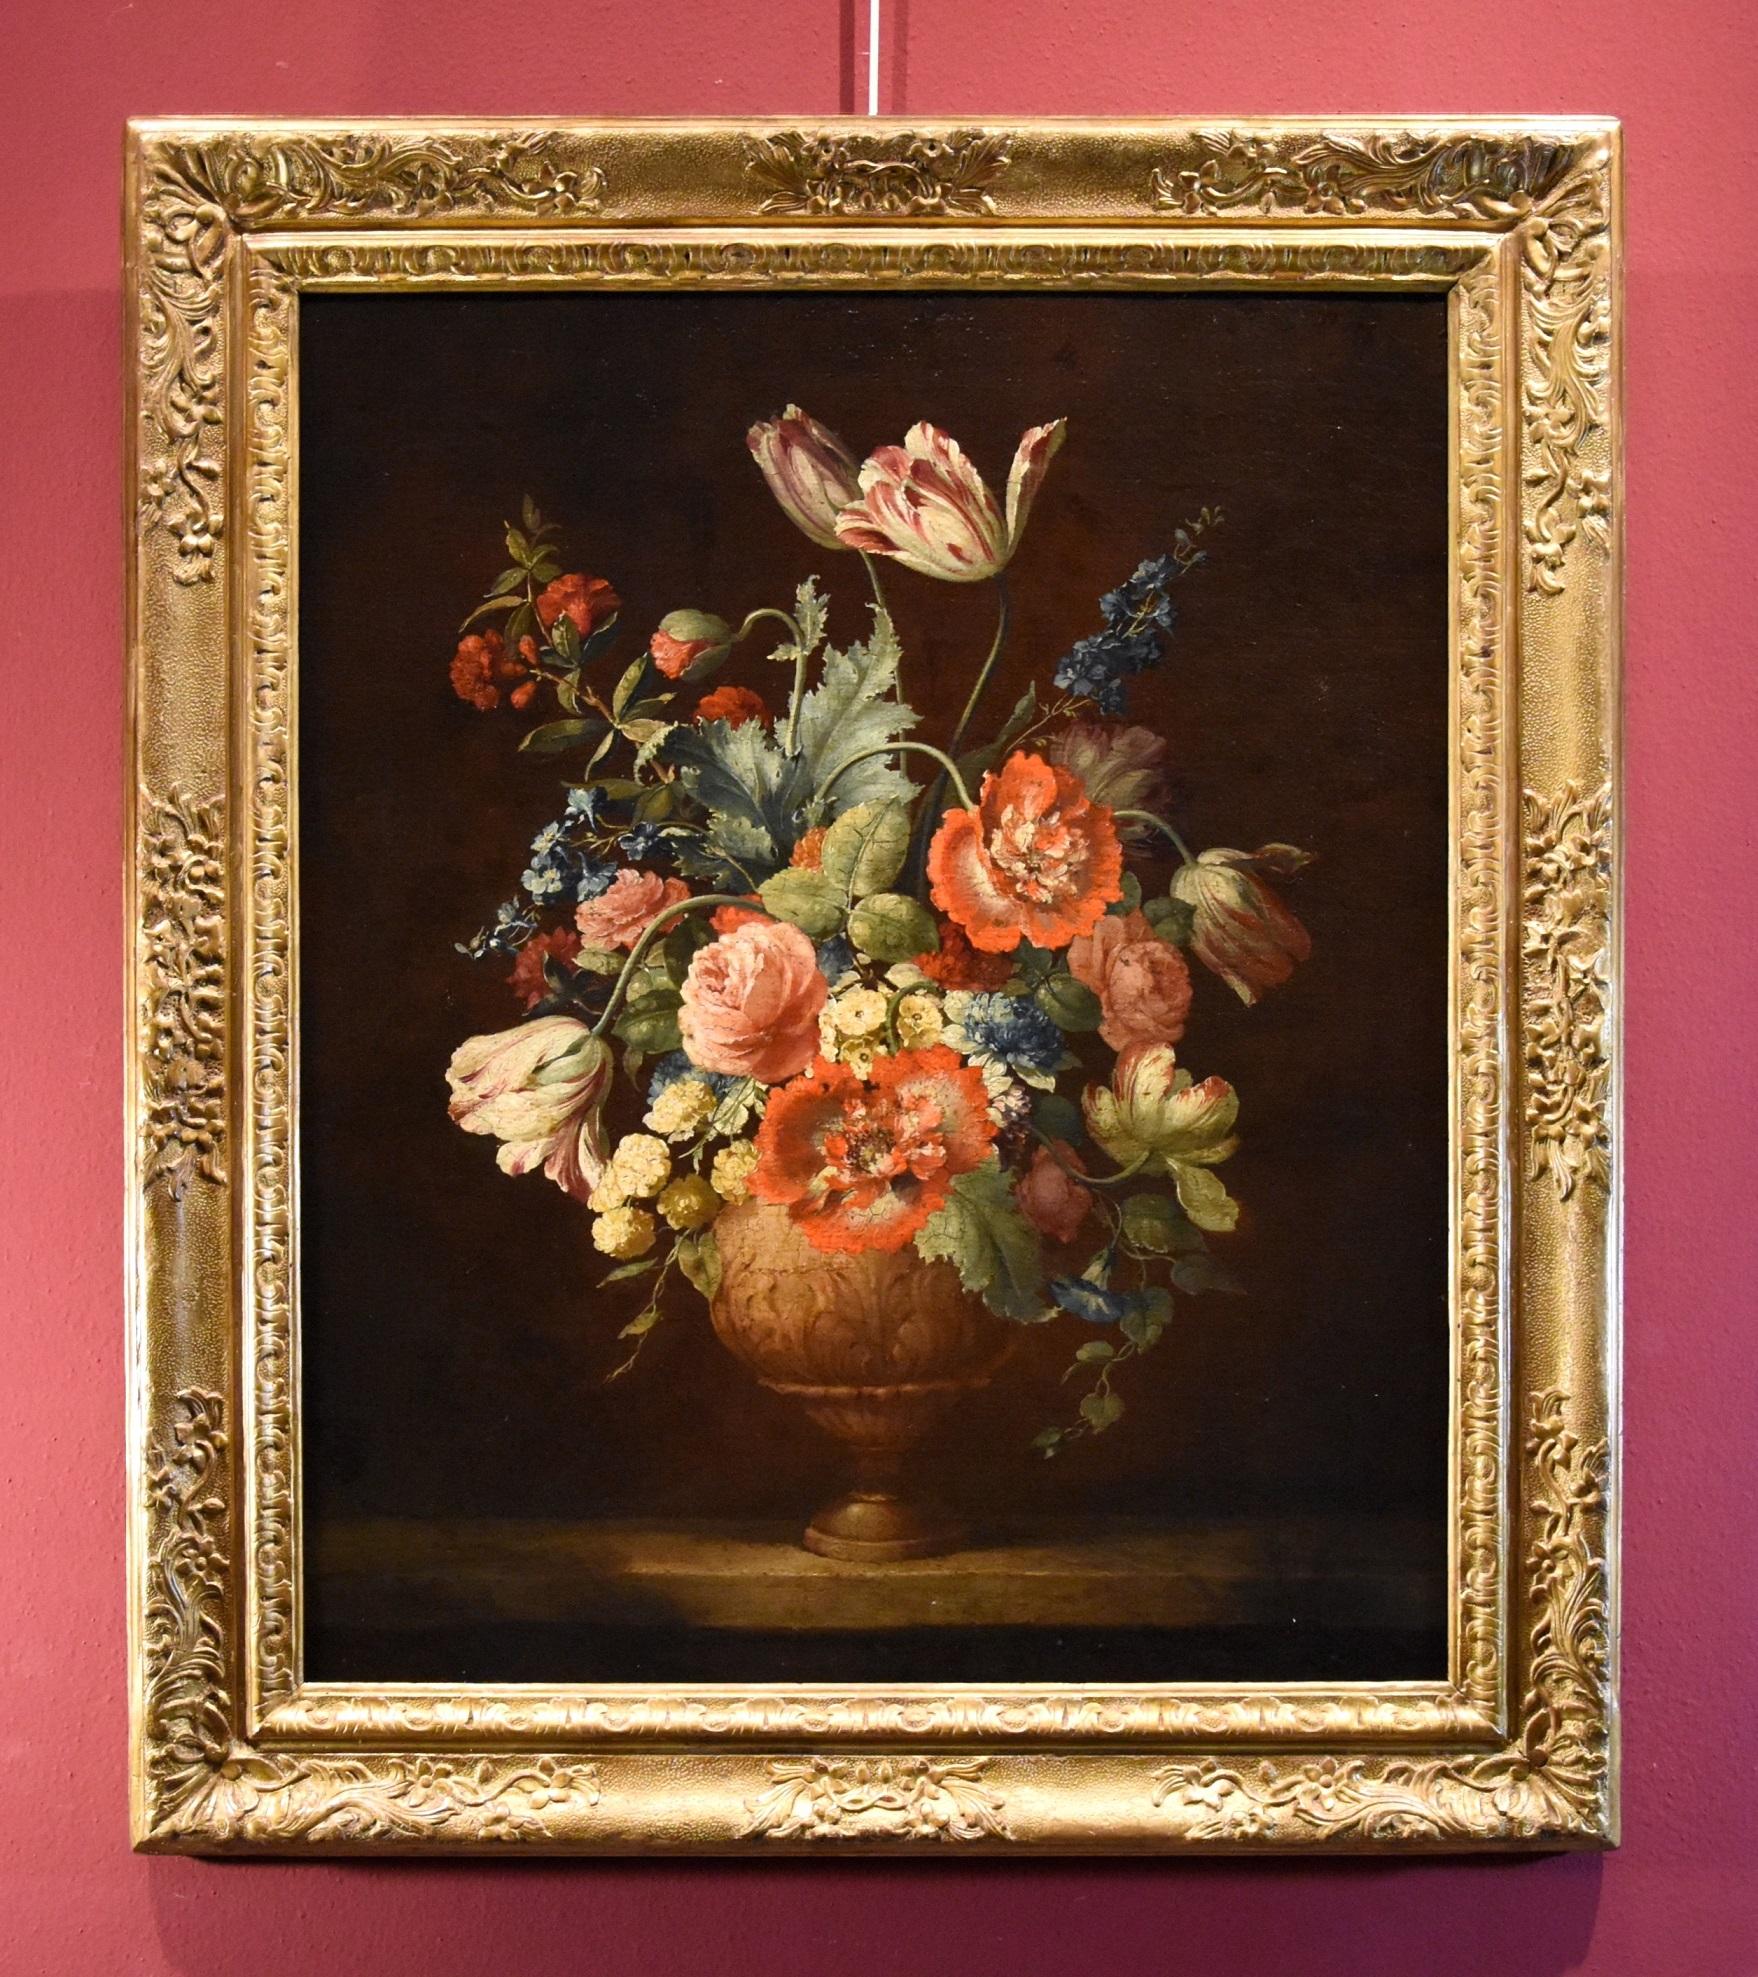 Jacob van Huysum (Amsterdam, 1687 - London, 1746) Still-Life Painting - Still Life Flowers Van Huysum Paint Oil on canvas 18th Century Old master